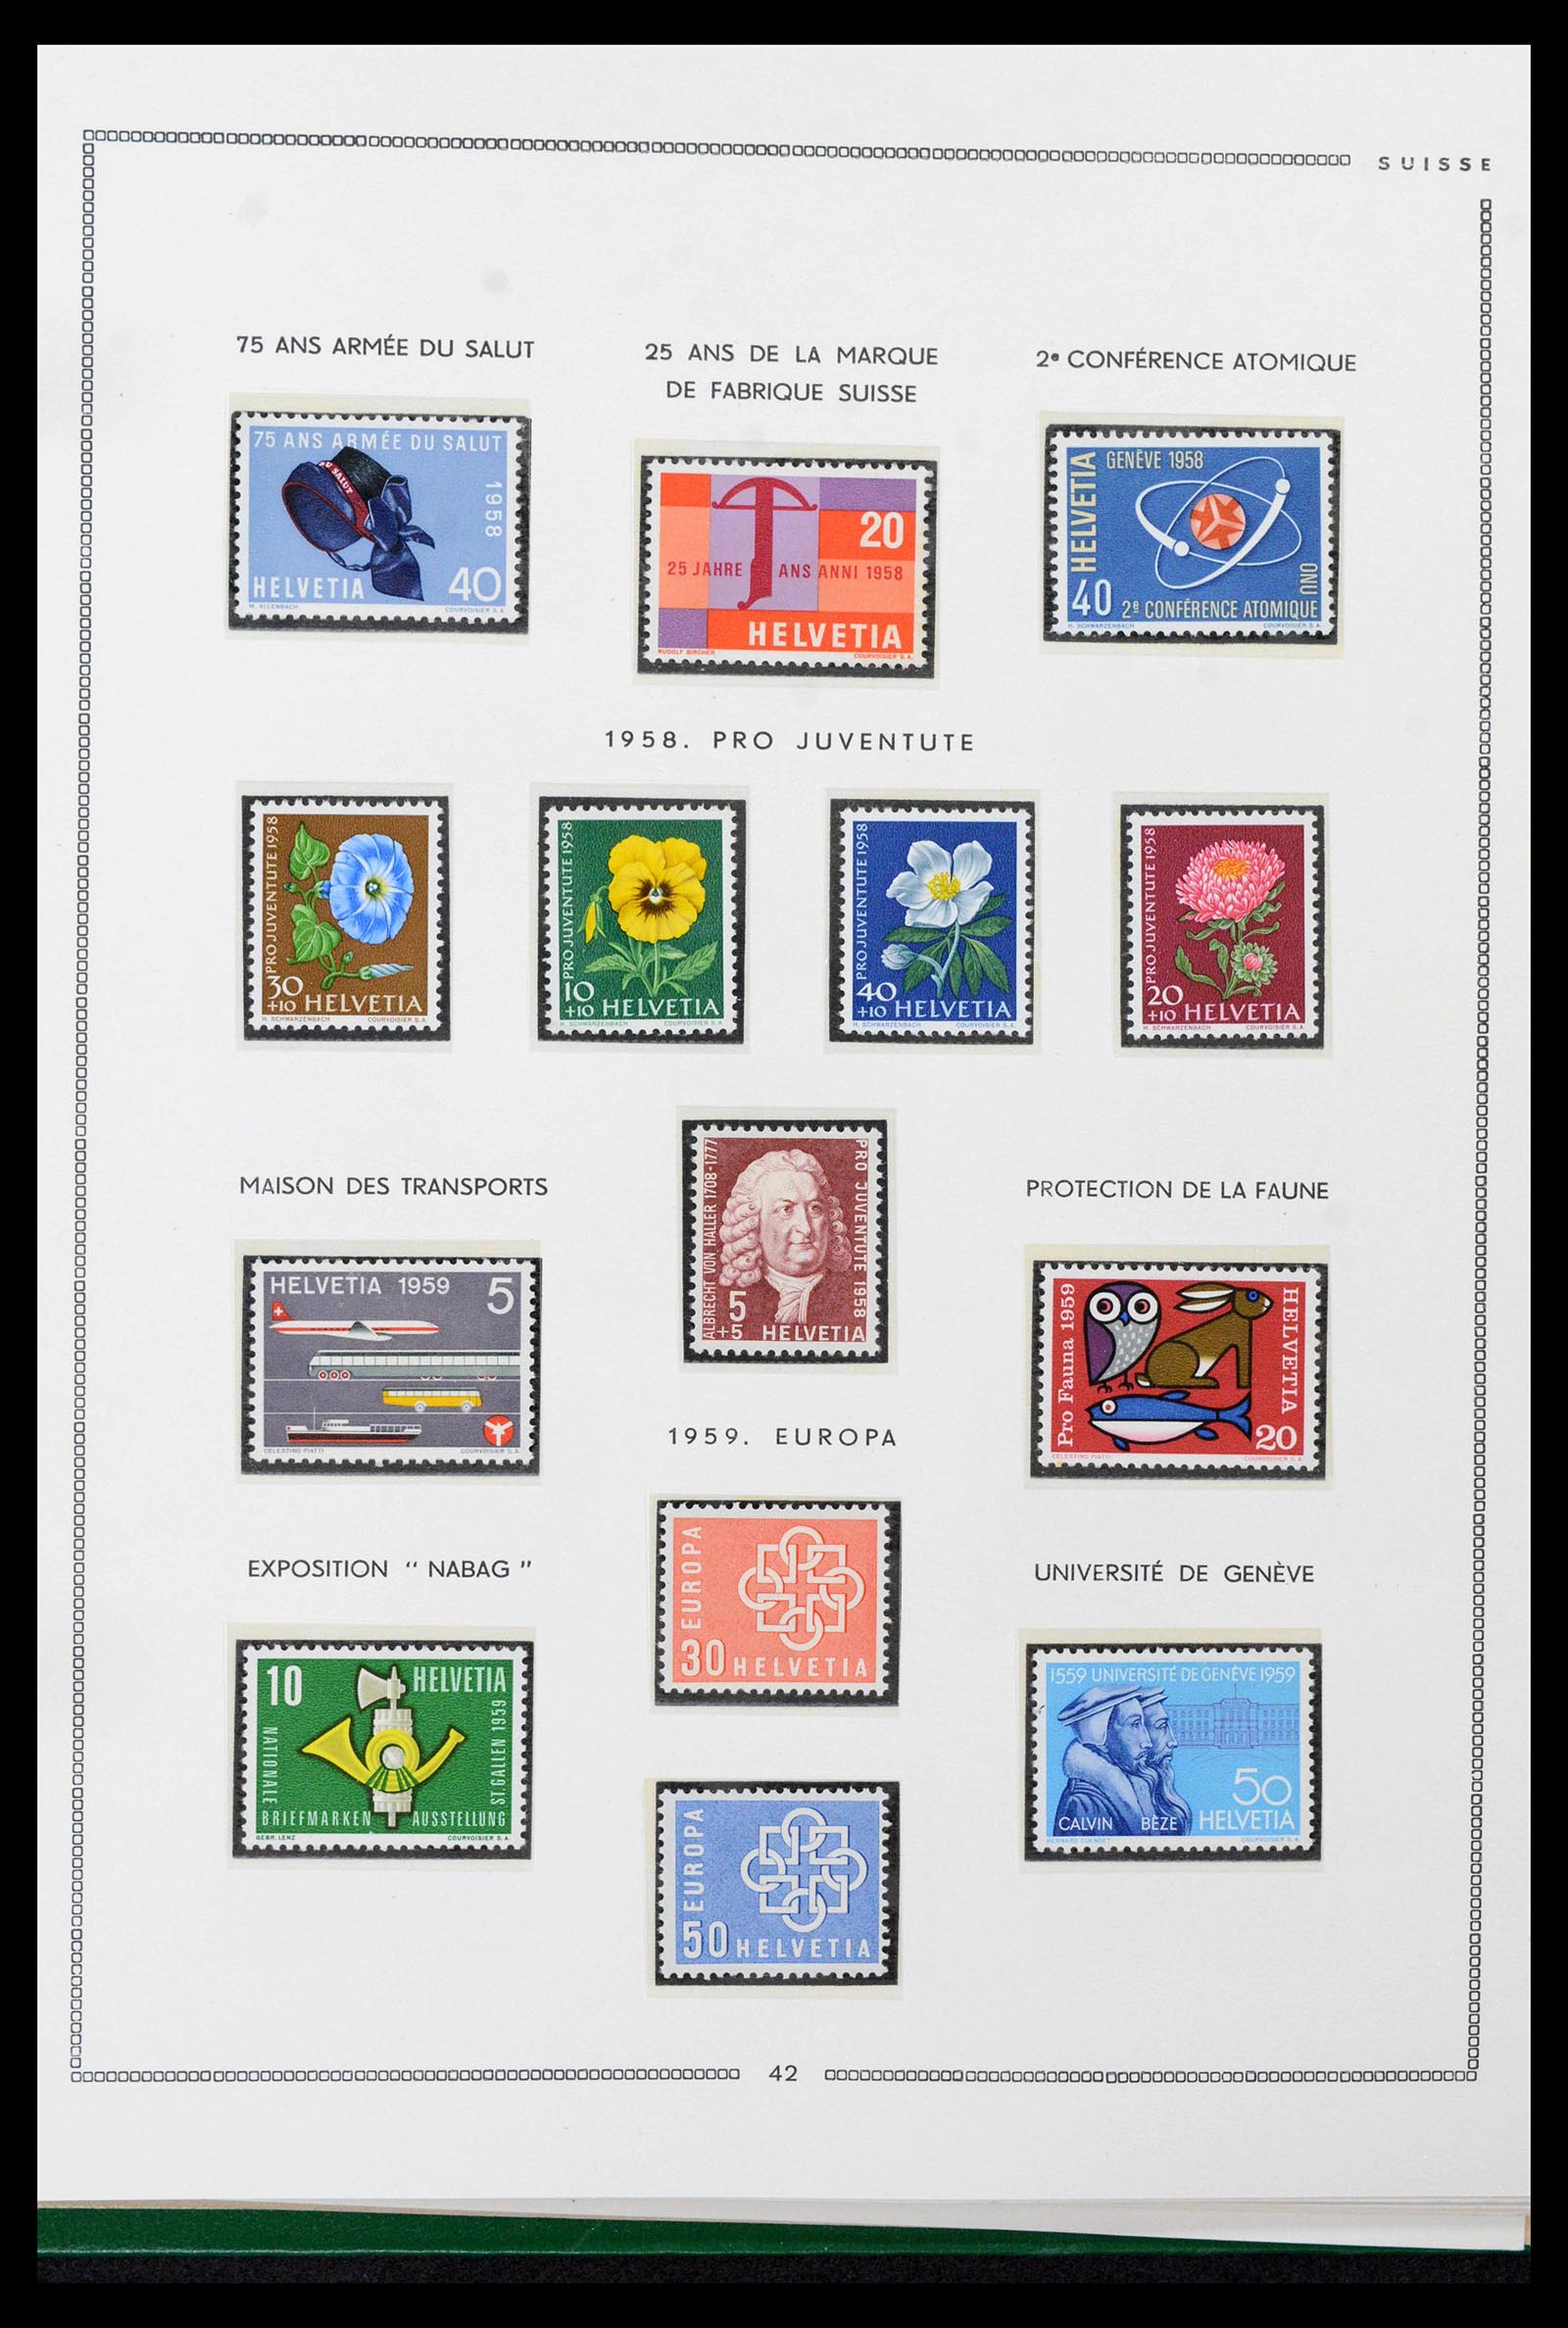 39096 0037 - Stamp collection 39096 Switzerland 1907-1963.